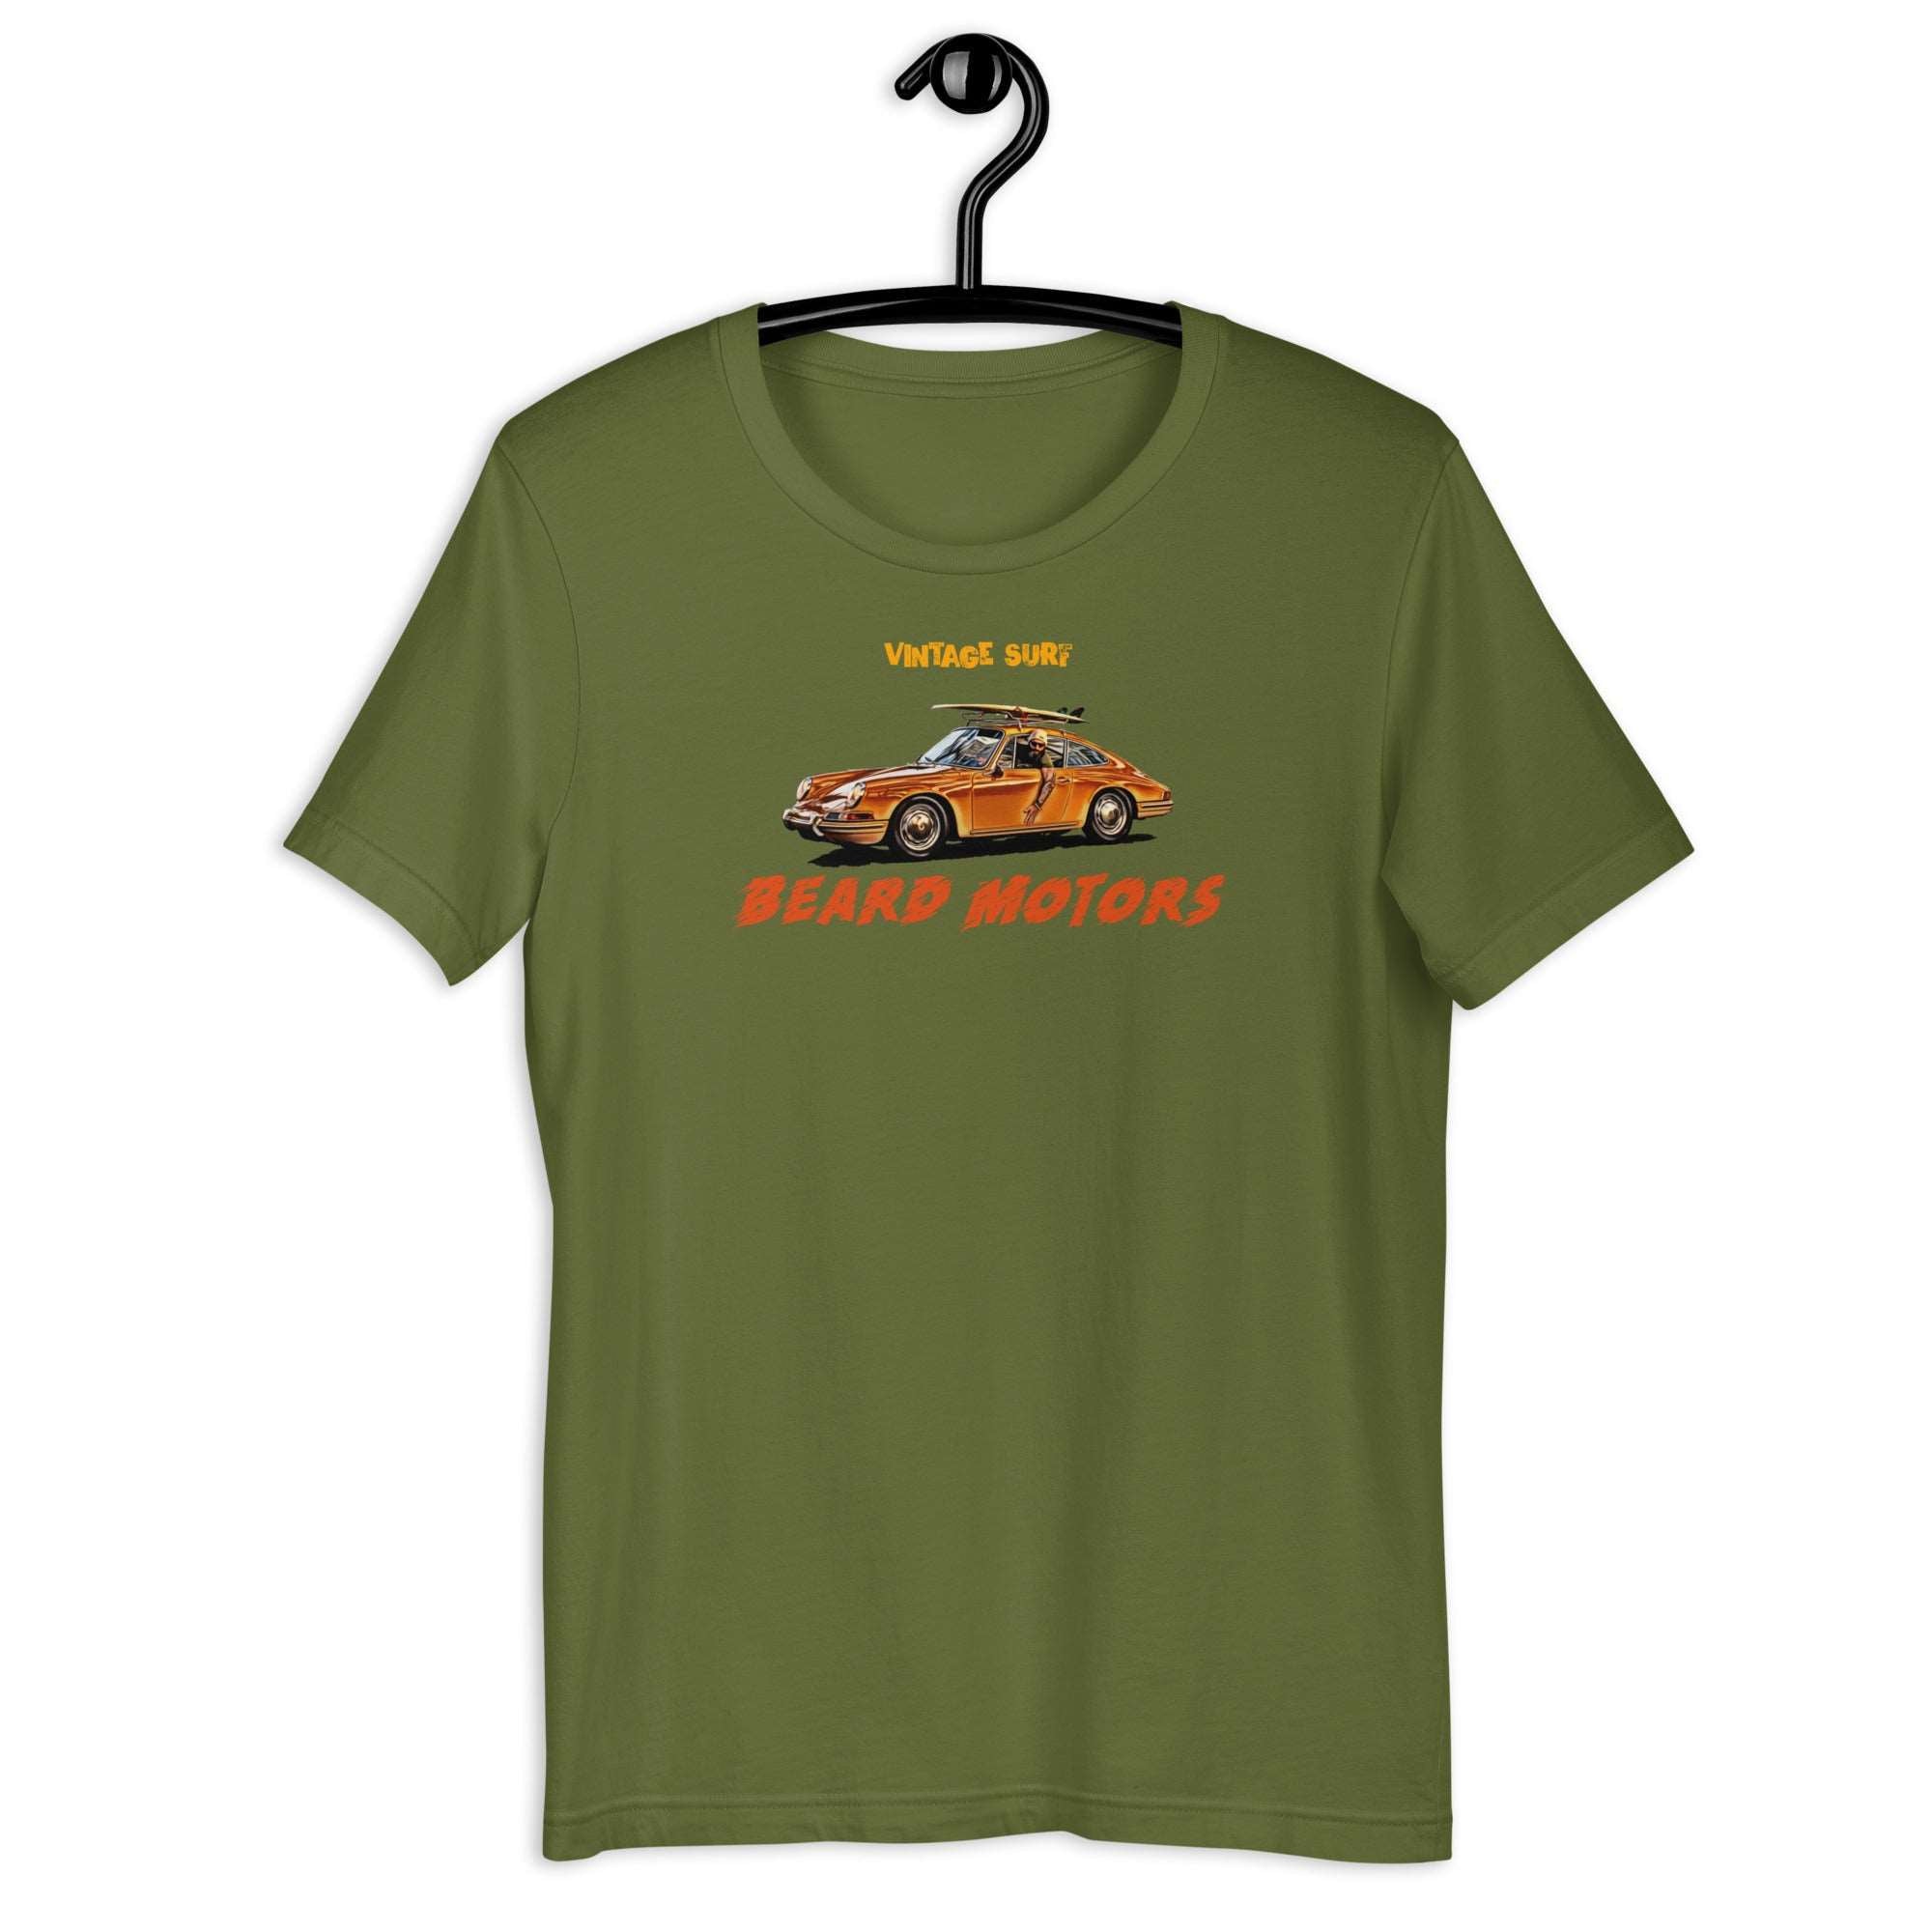 Beard Motors 911 Vintage Surf T-shirt Olive